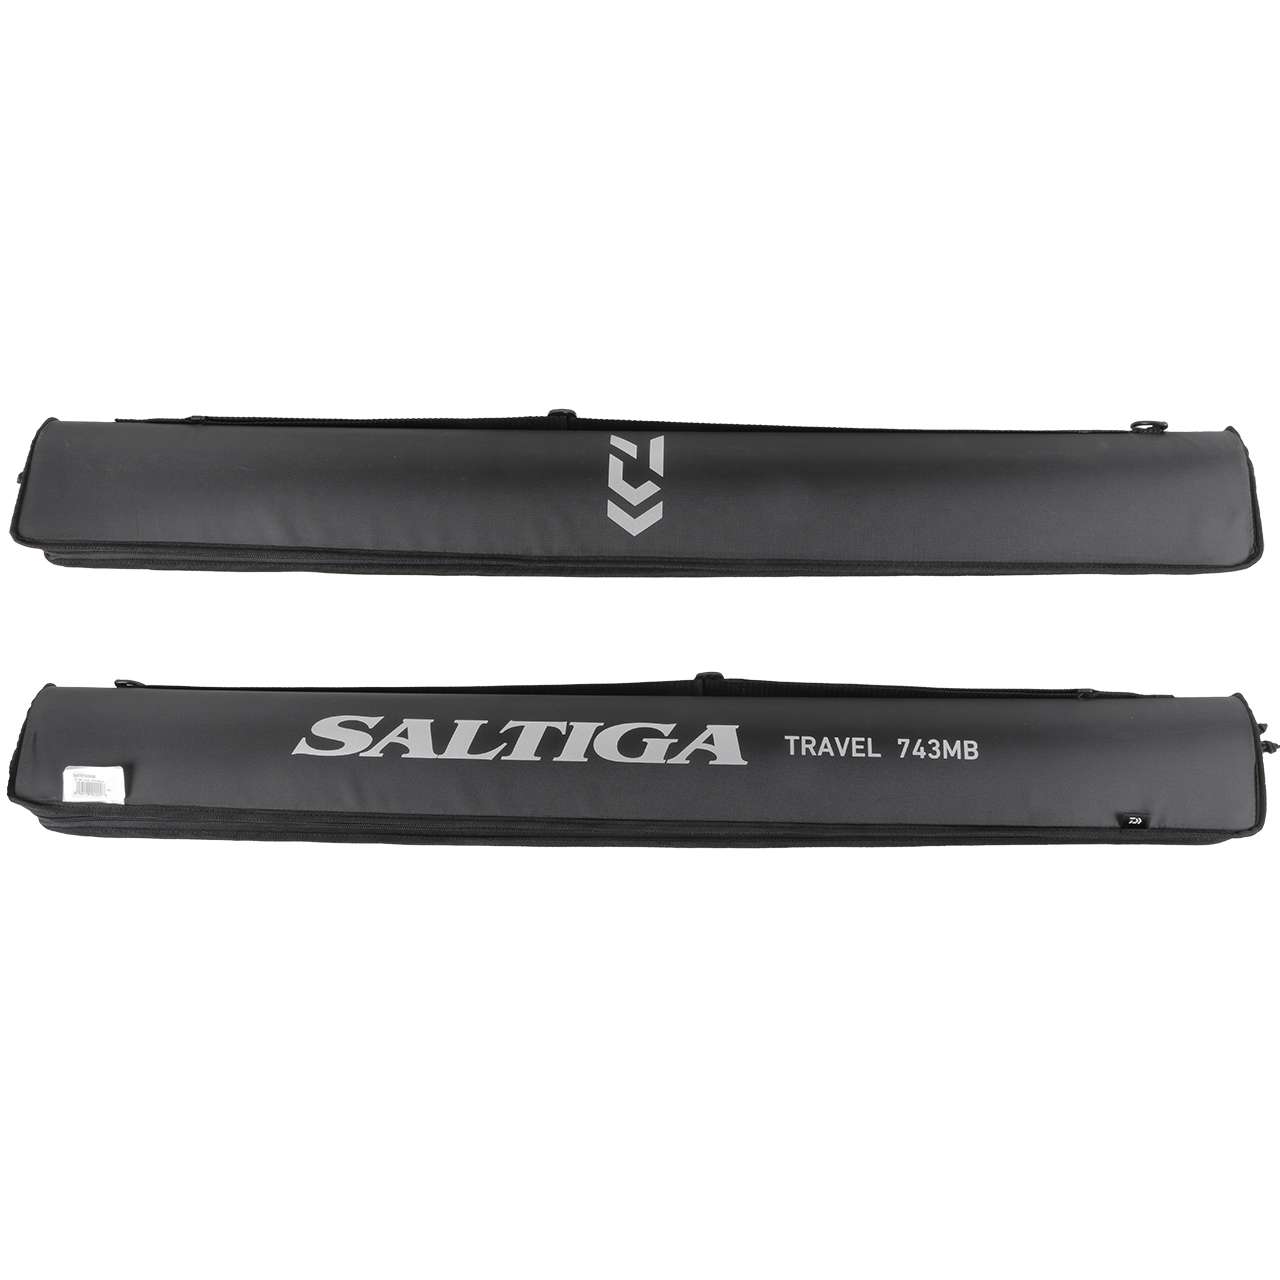 Daiwa SATR743MB Saltiga Saltwater Travel Casting Rod